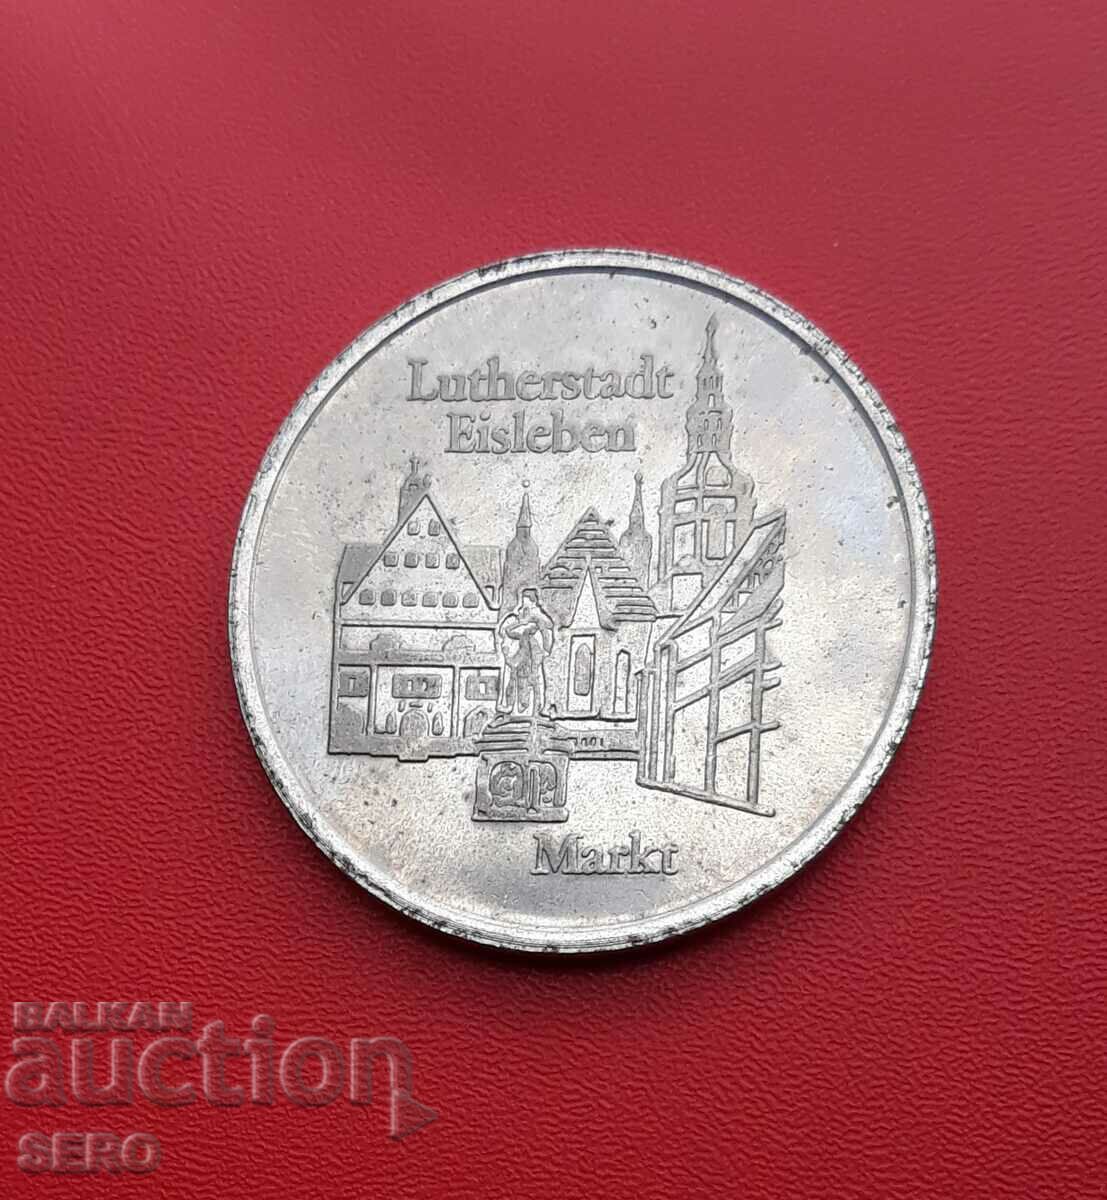 Germania-Medalia-Eisleben-orașul natal al lui Martin Luther